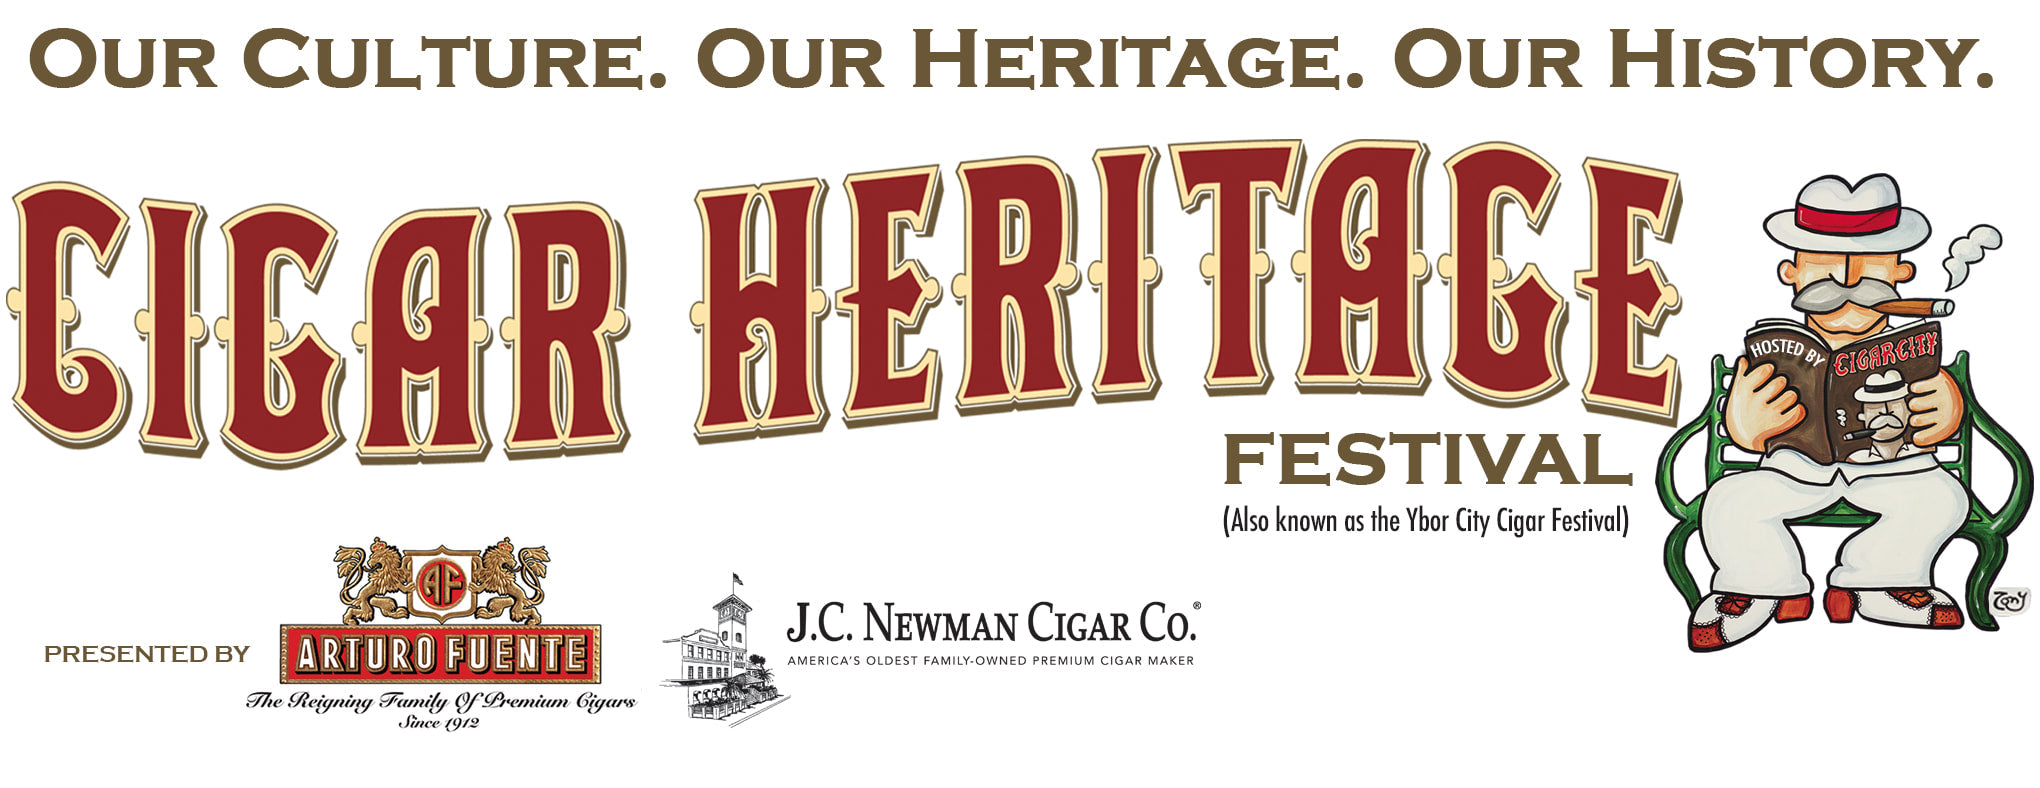 Cigar Heritage Festival